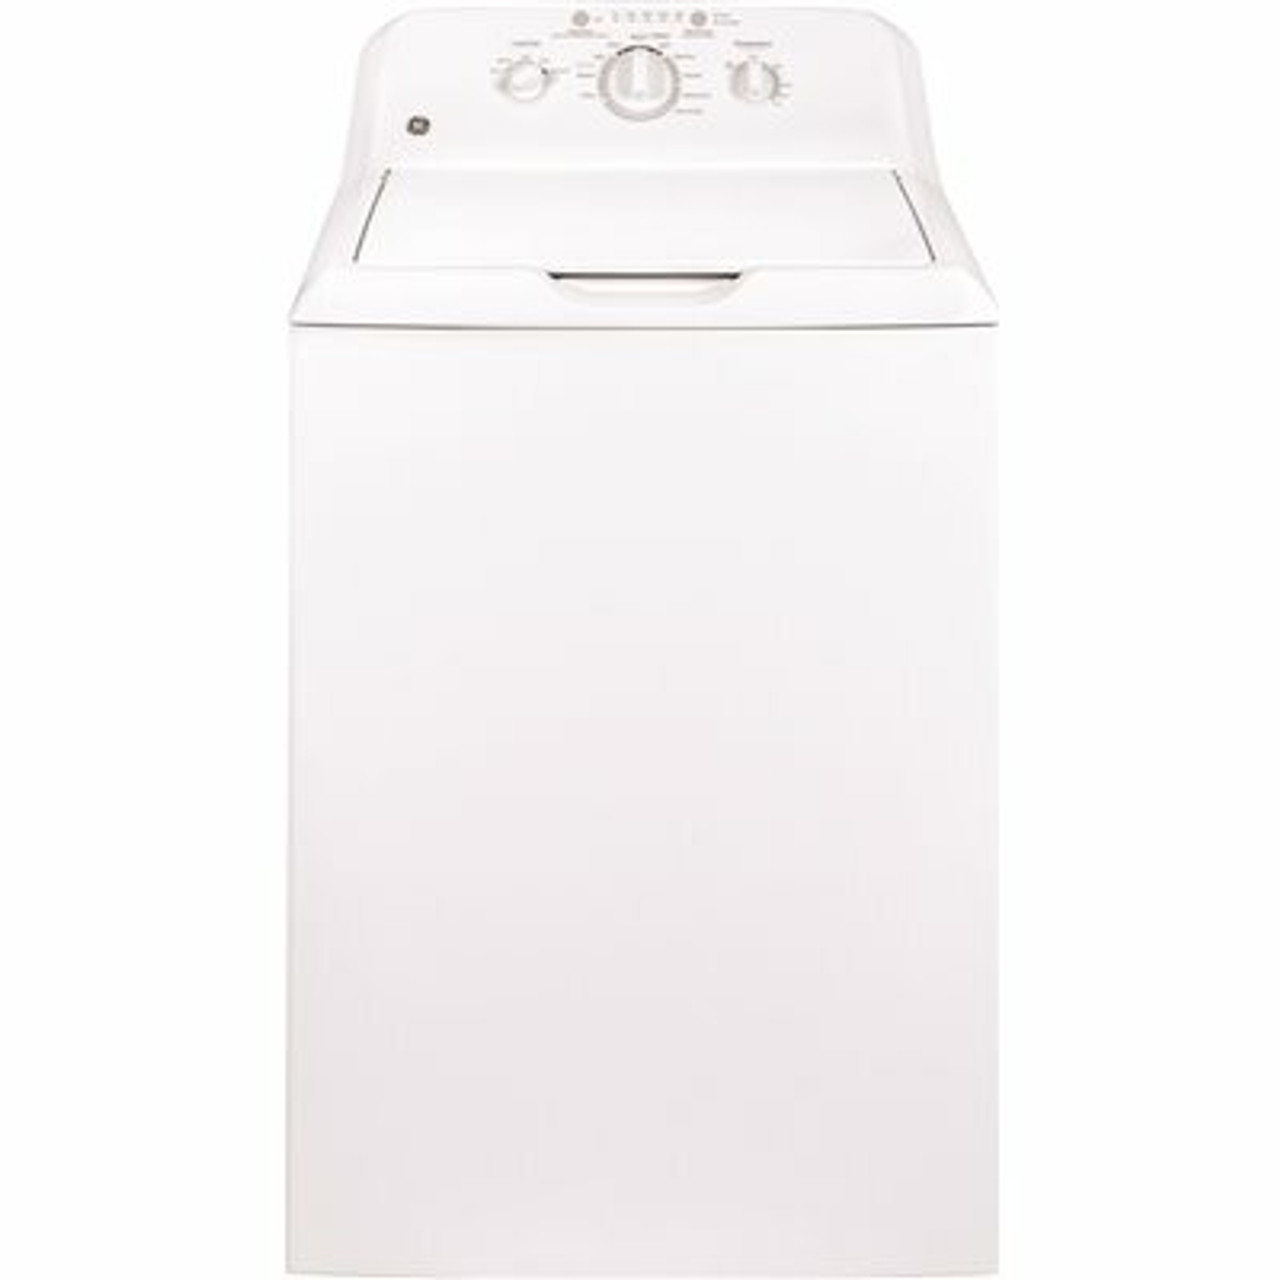 Ge 3.8 Cu. Ft. Top Load Washing Machine, White